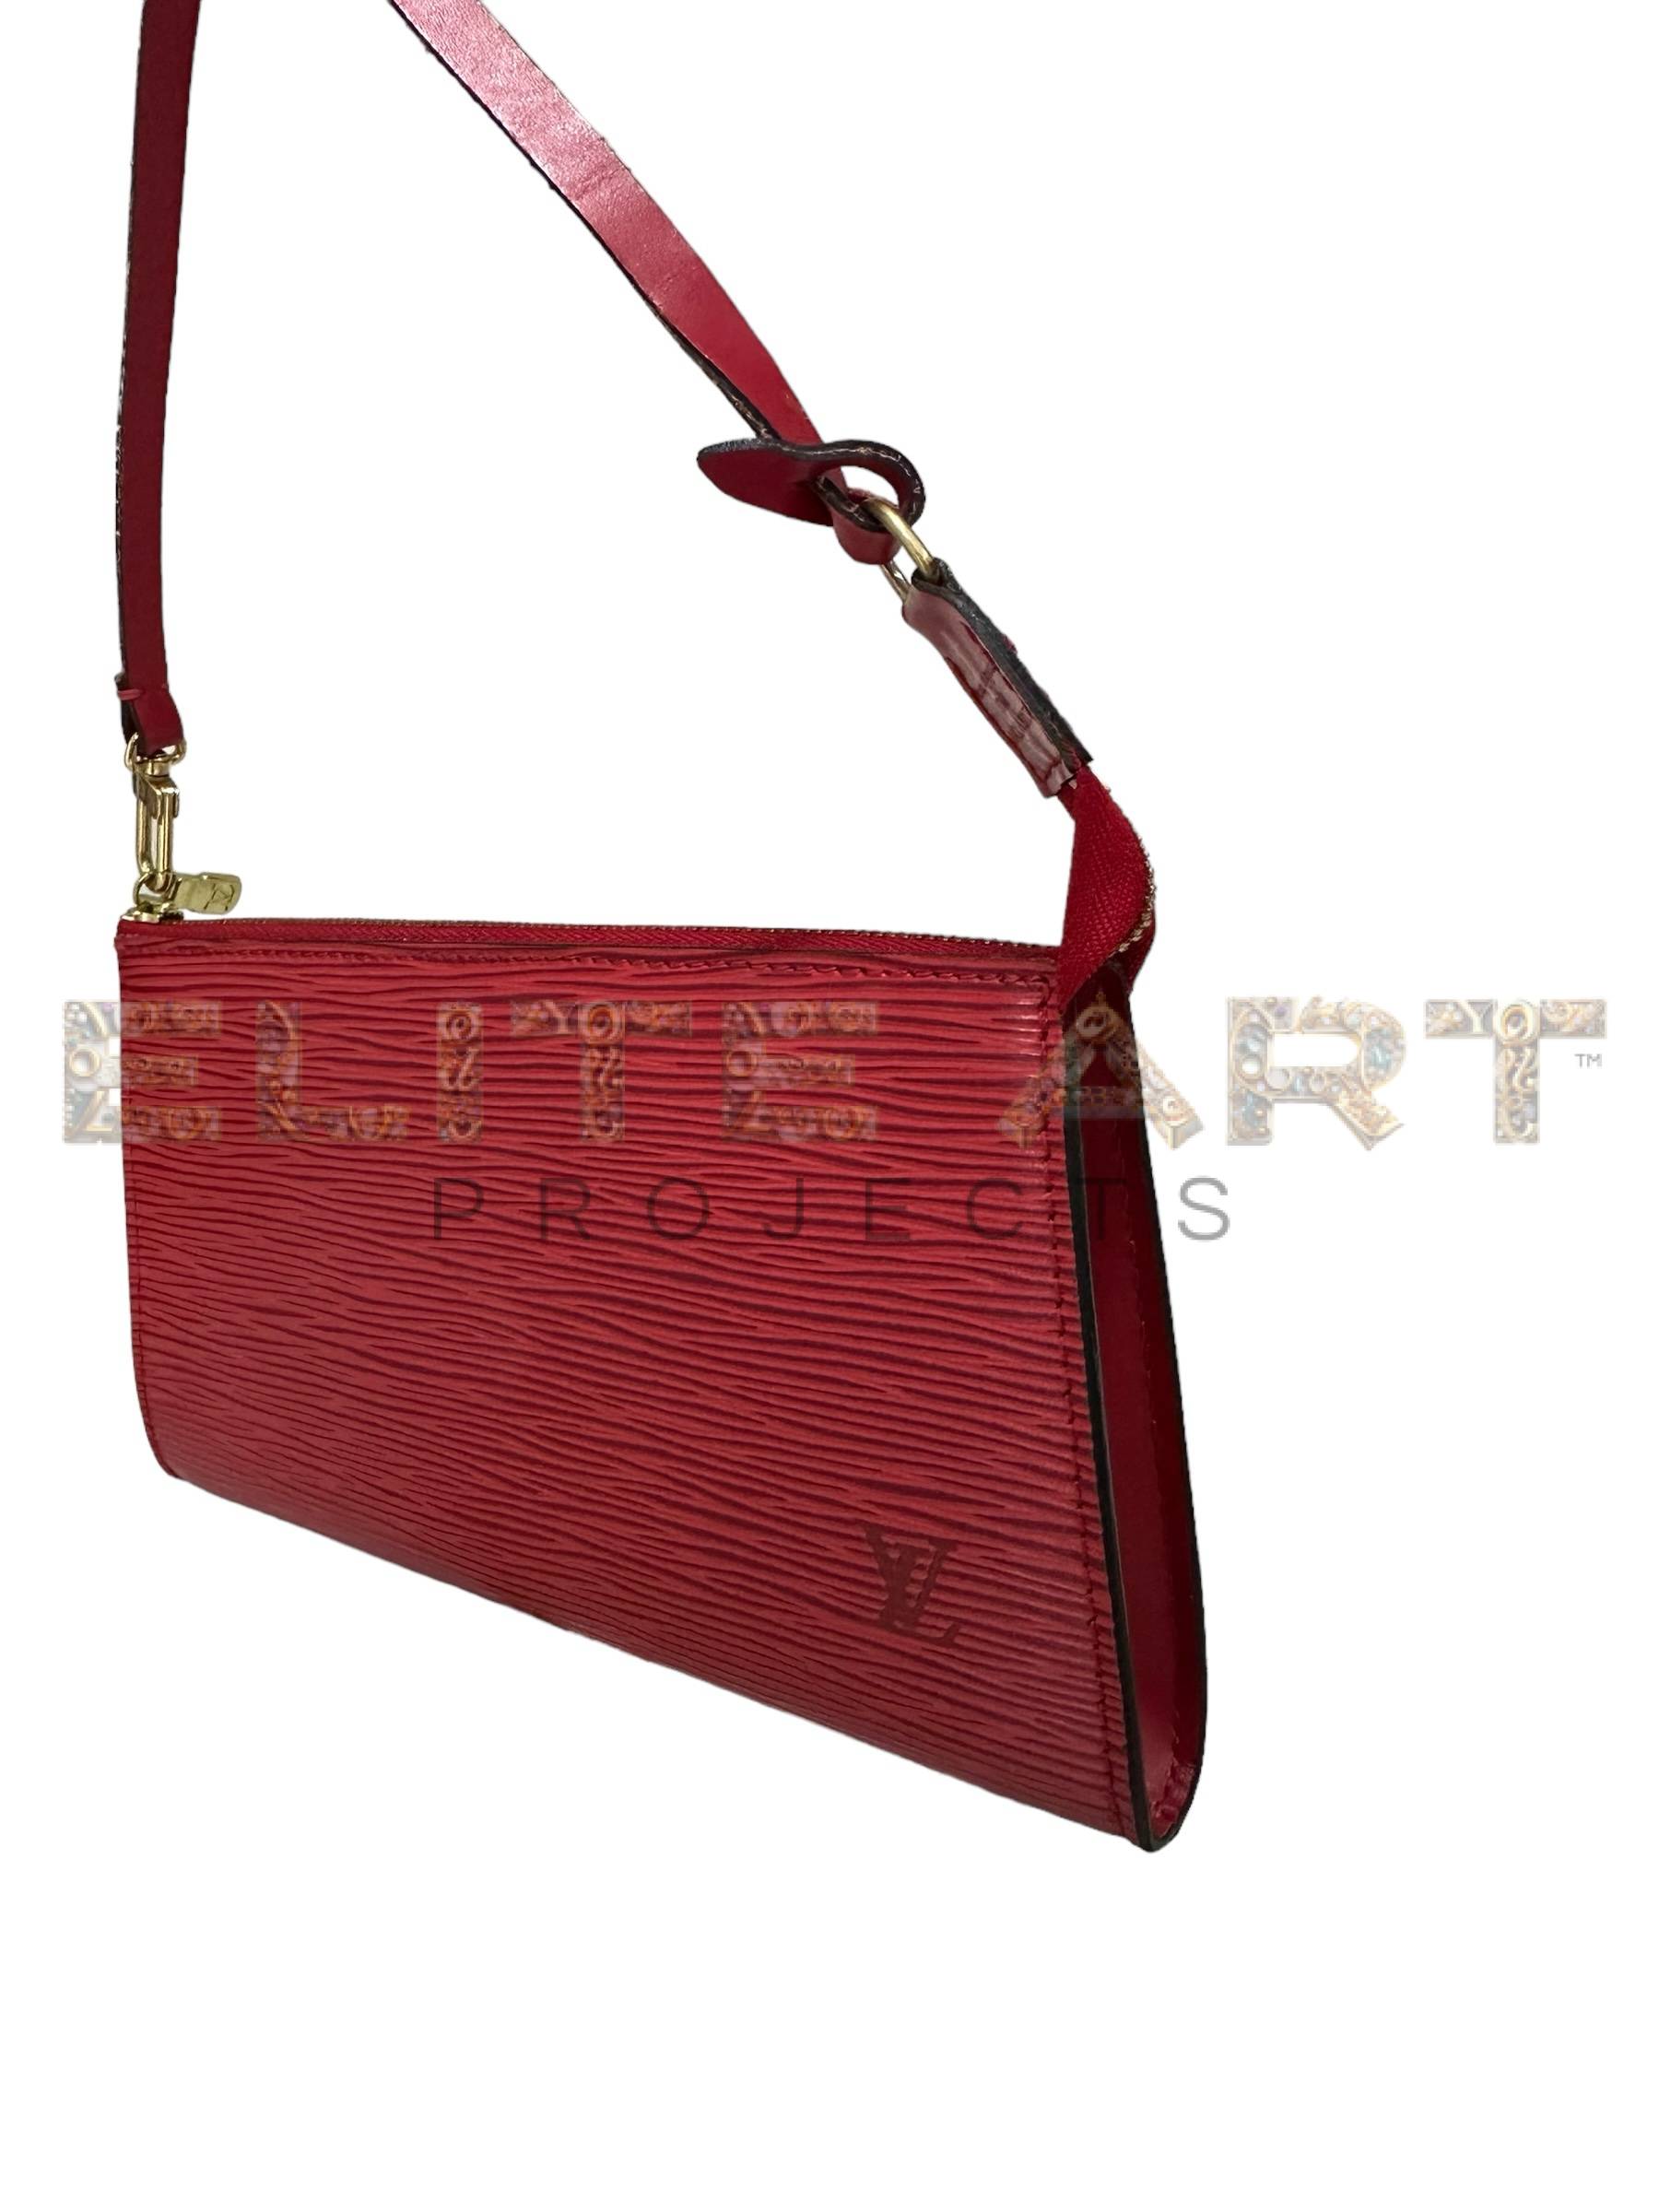 Louis Vuitton clutch, red epi leather, golden hardware, Elite Art Projects, ELS Fashion TV